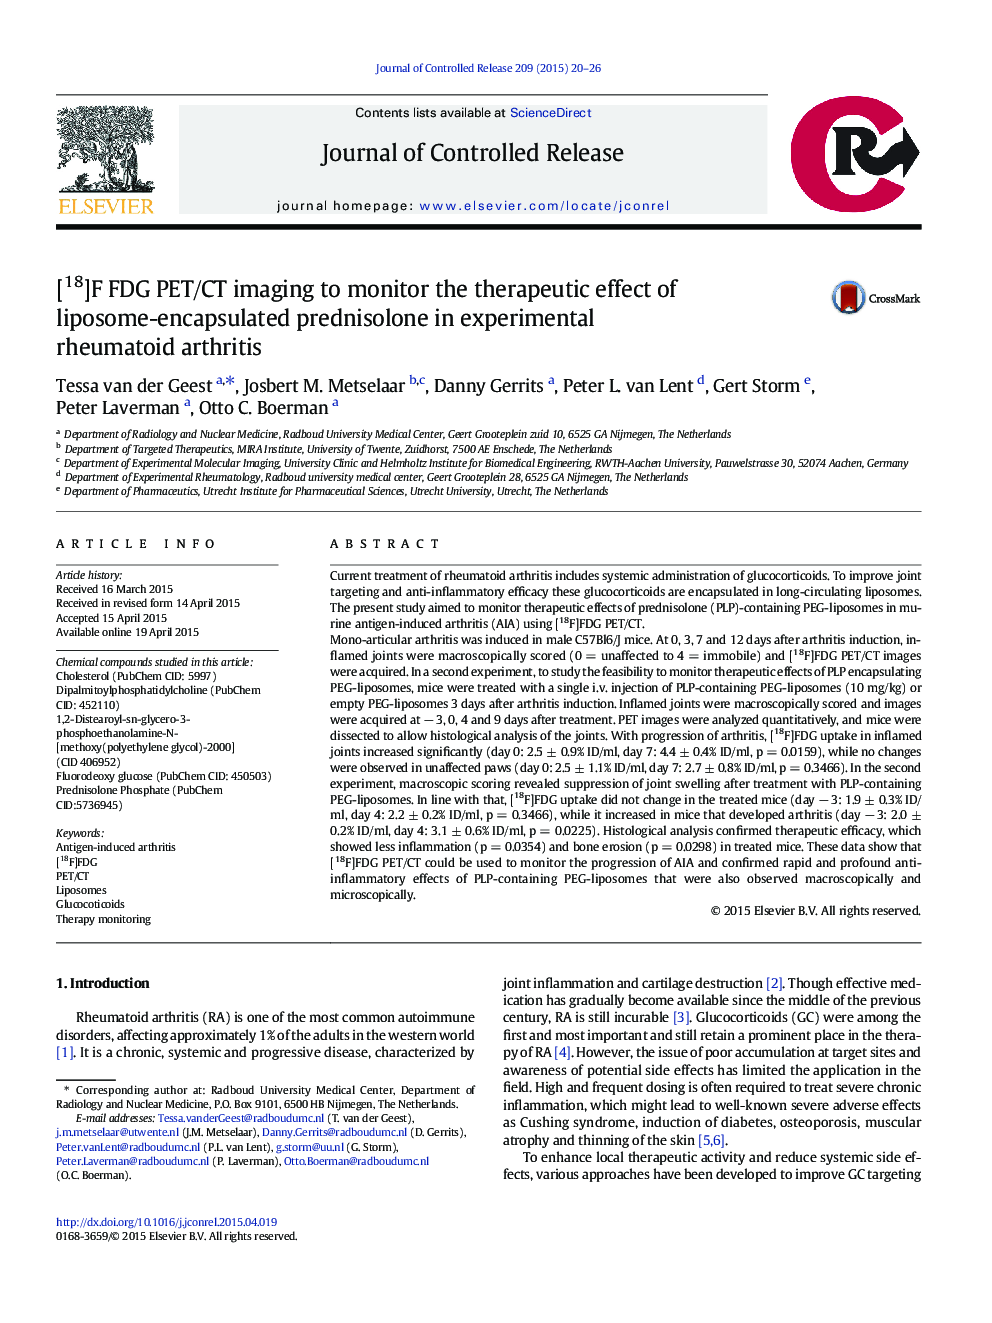 [18]F FDG PET/CT imaging to monitor the therapeutic effect of liposome-encapsulated prednisolone in experimental rheumatoid arthritis